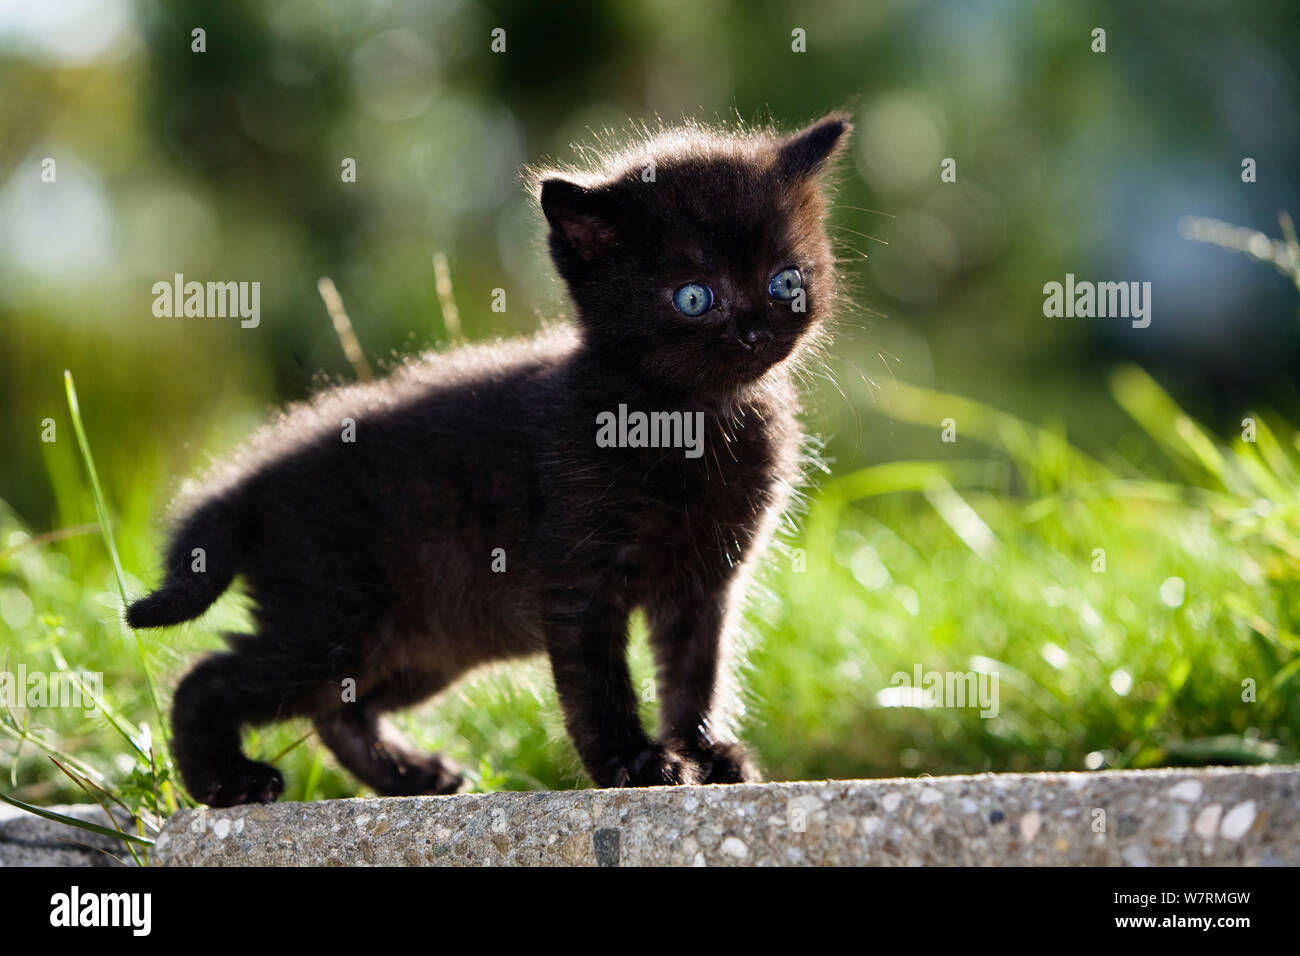 Black kitten in garden Stock Photo